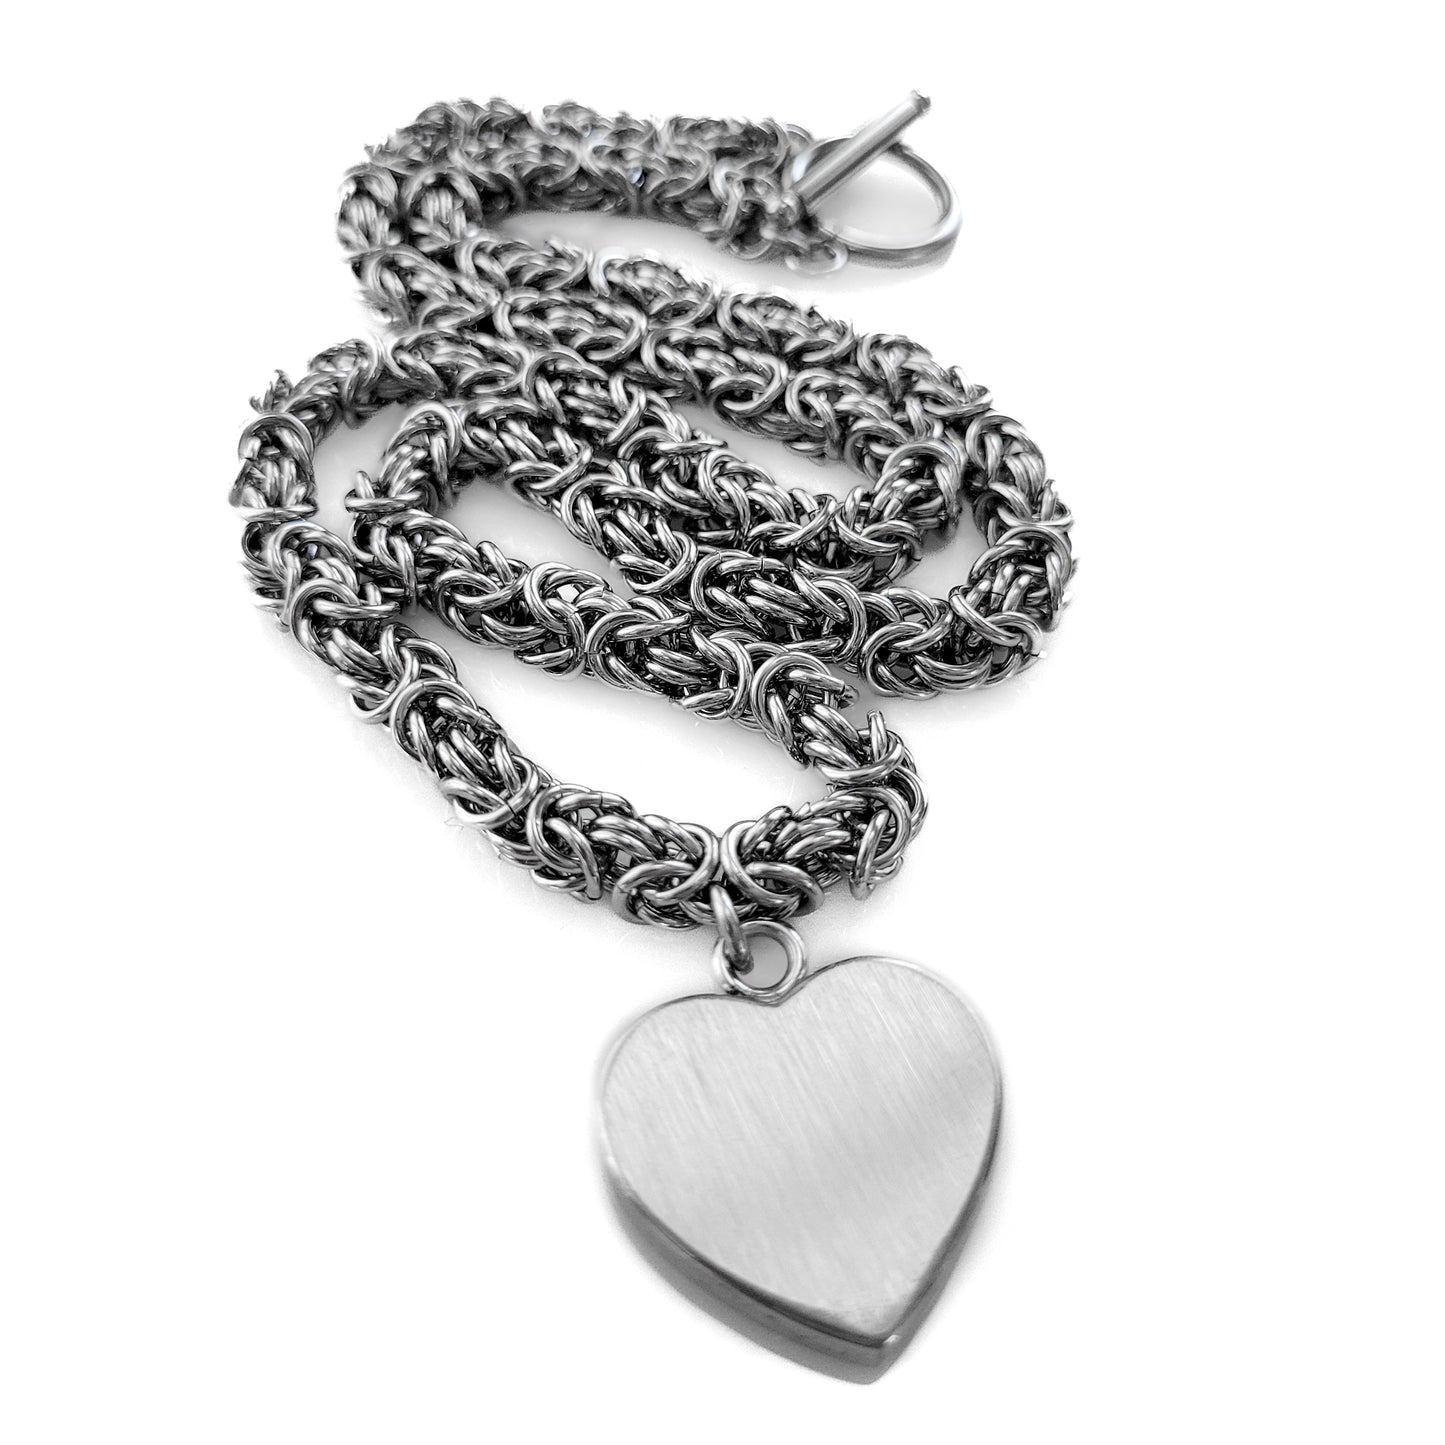 Stainless Steel Byzantine Chain Heart Pendant